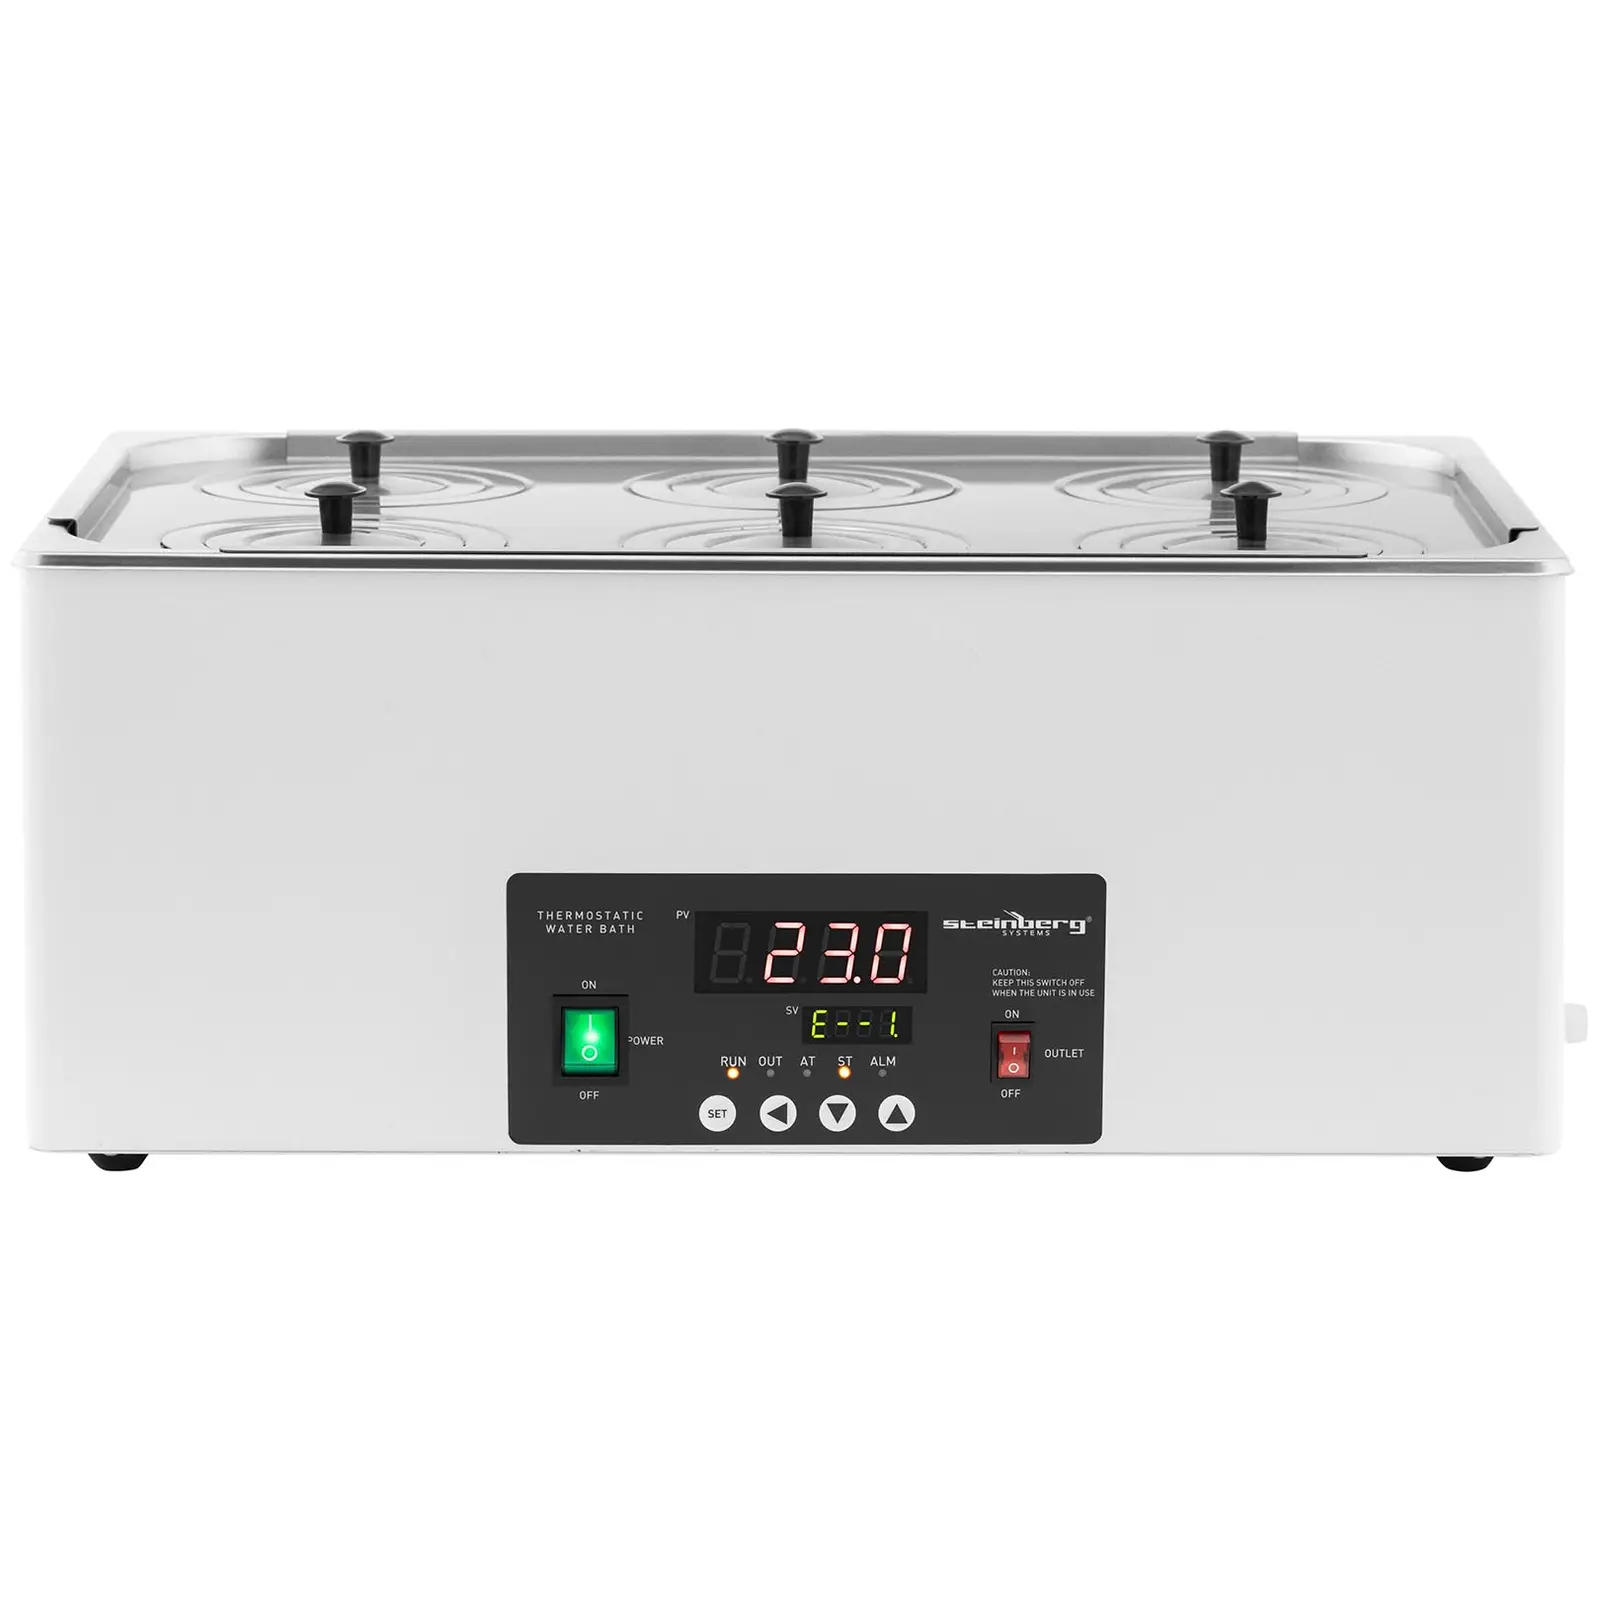 Thermostatic water bath - digital - 22.5 l - 5 - 100 °C - 500 x 300 x 150  mm